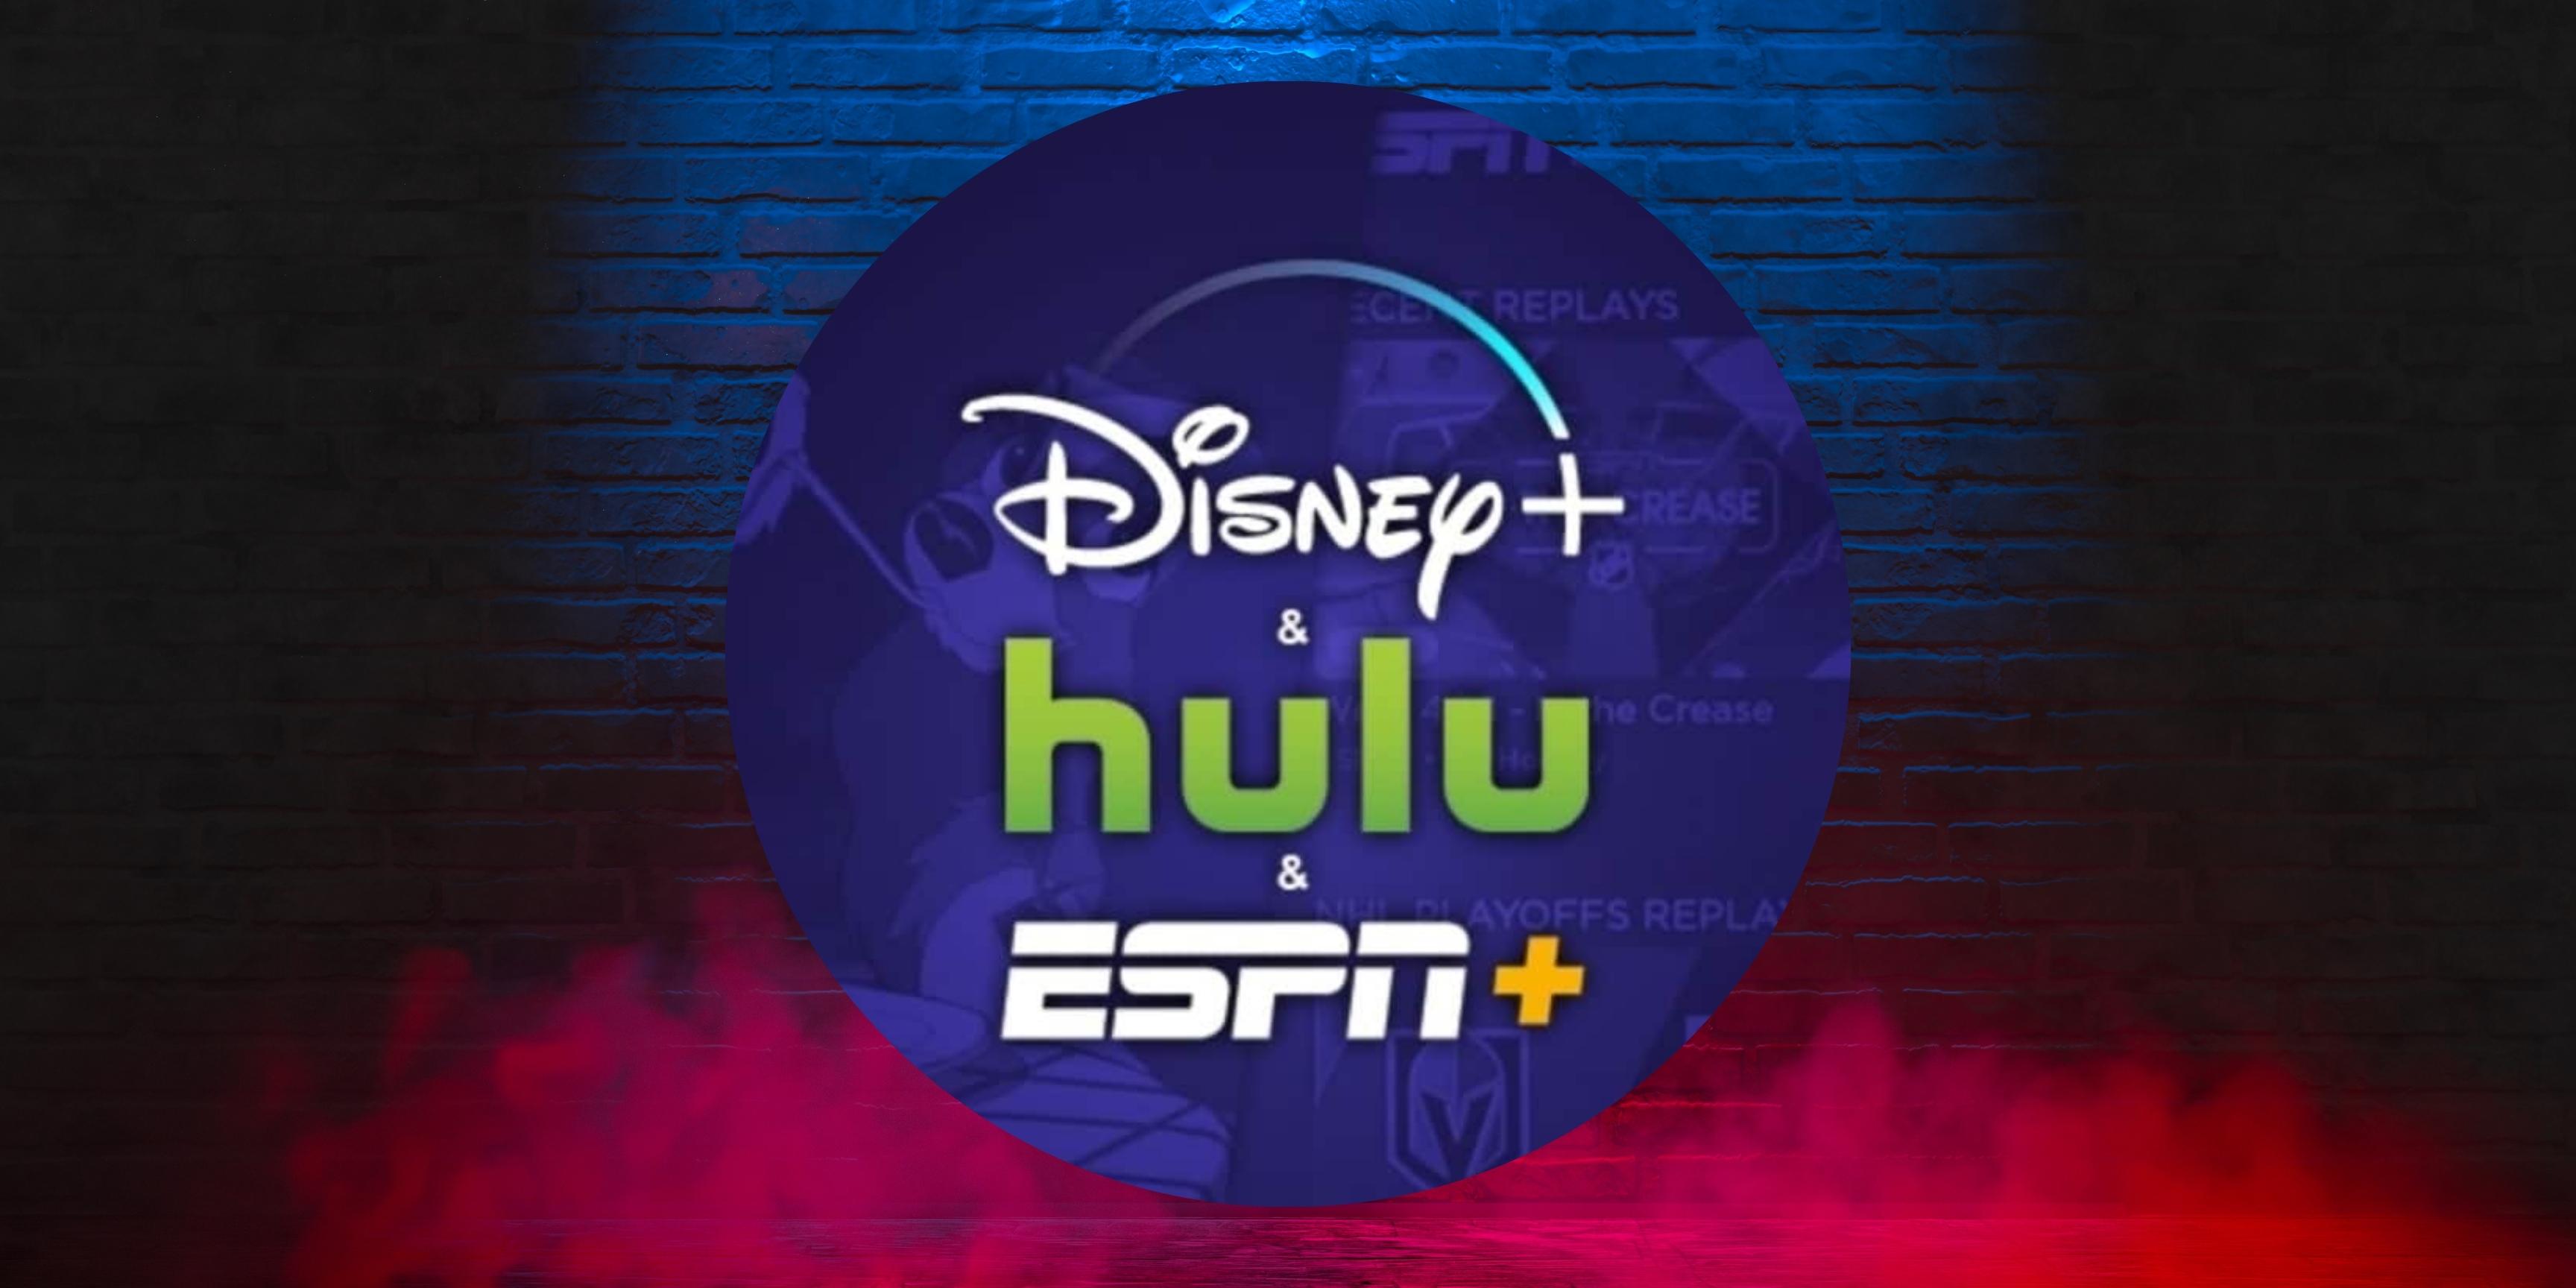 Disney+ & Hulu & ESPN+ Bundle | 6 Months Warranty